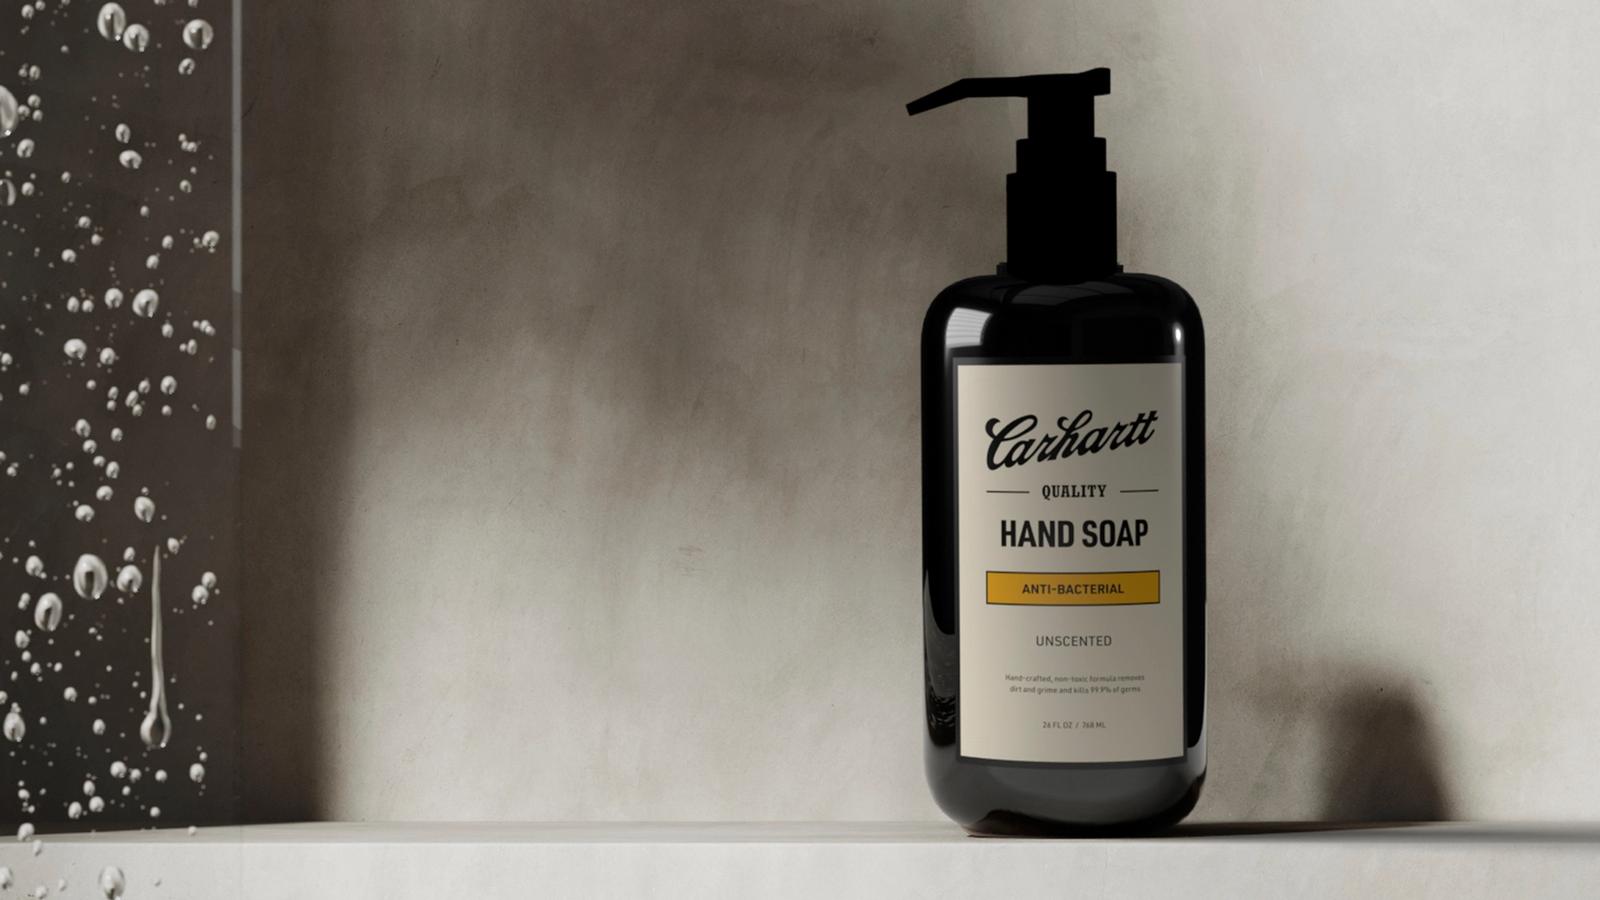 Carhartt Hand Soap // Packaging 